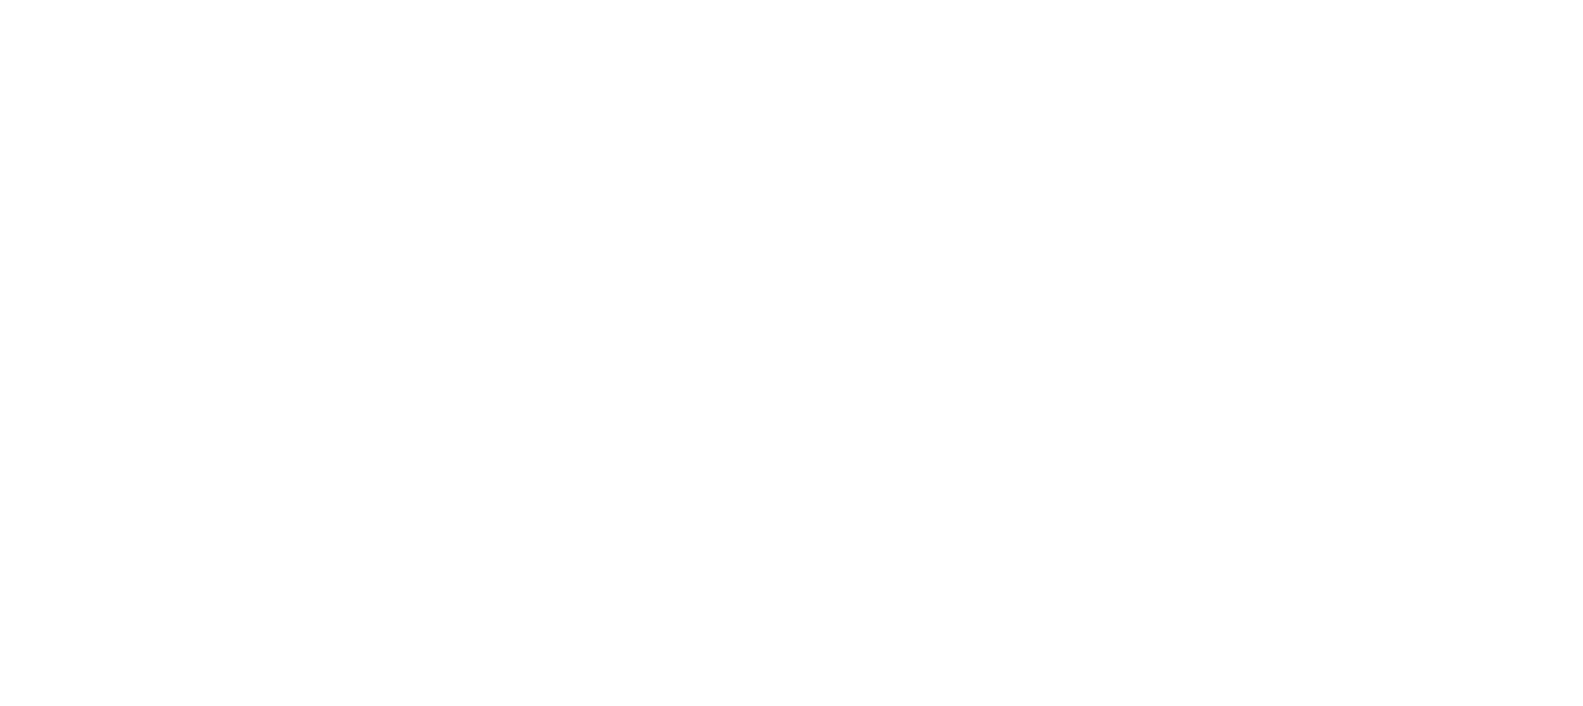 Air Transport Services Group logo for dark backgrounds (transparent PNG)